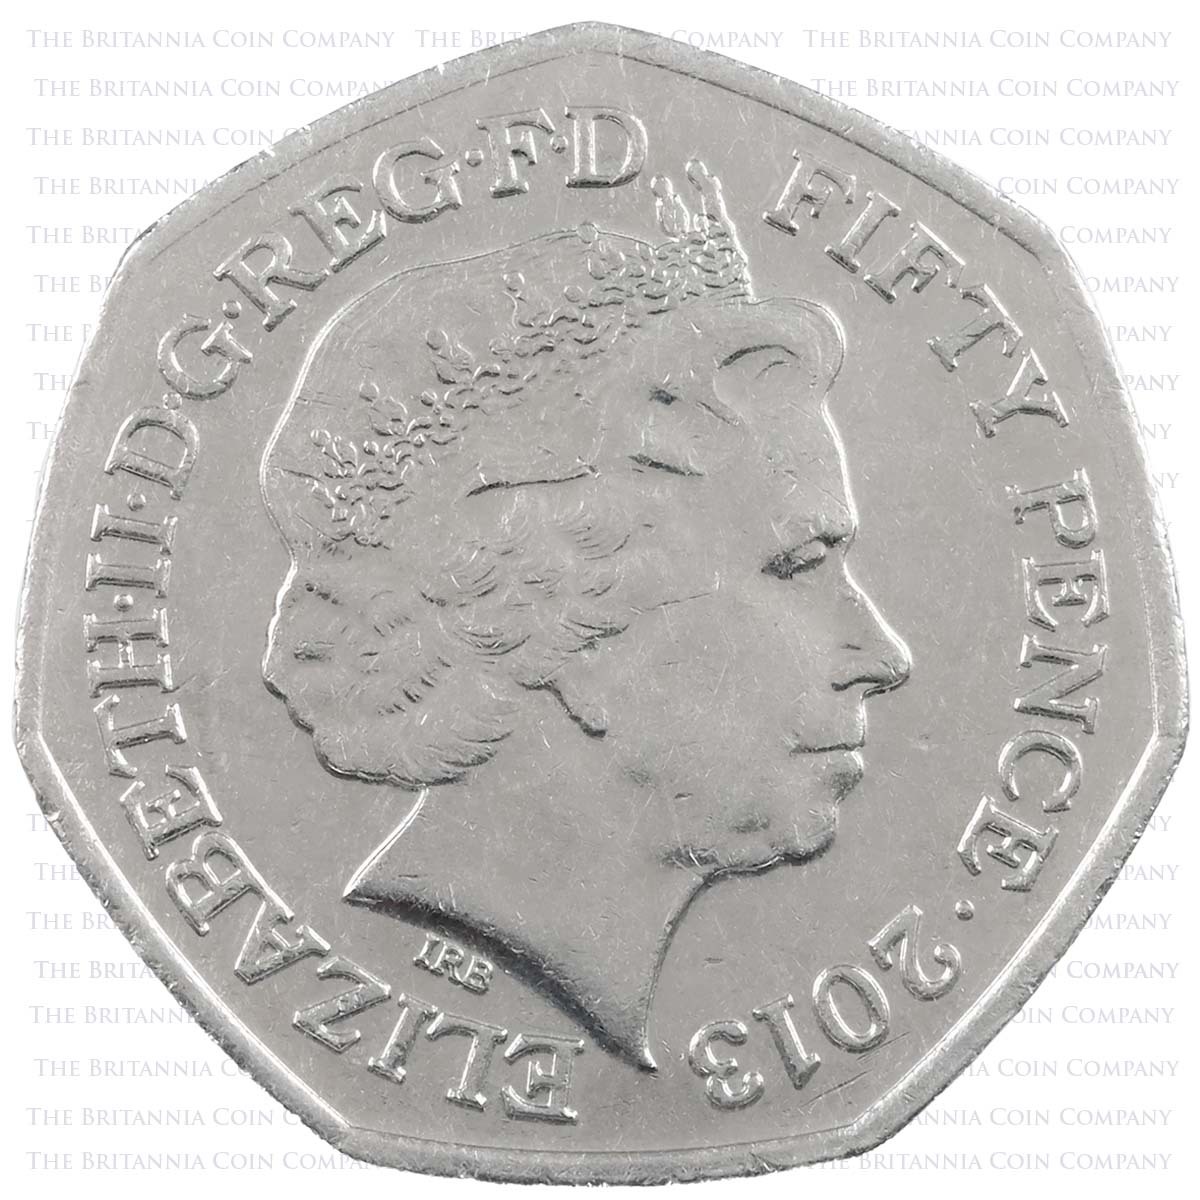 2013 Benjamin Britten Circulated Fifty Pence Coin Obverse